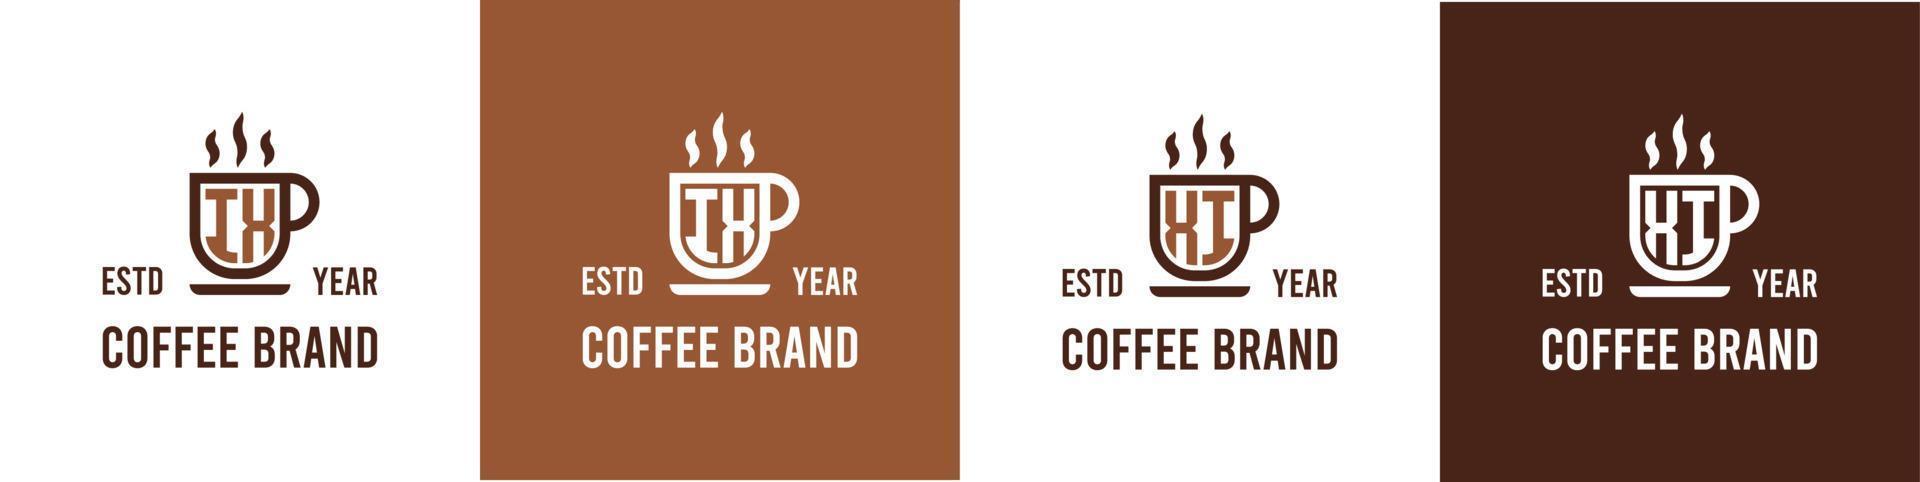 letra ix y xi café logo, adecuado para ninguna negocio relacionado a café, té, o otro con ix o xi iniciales. vector